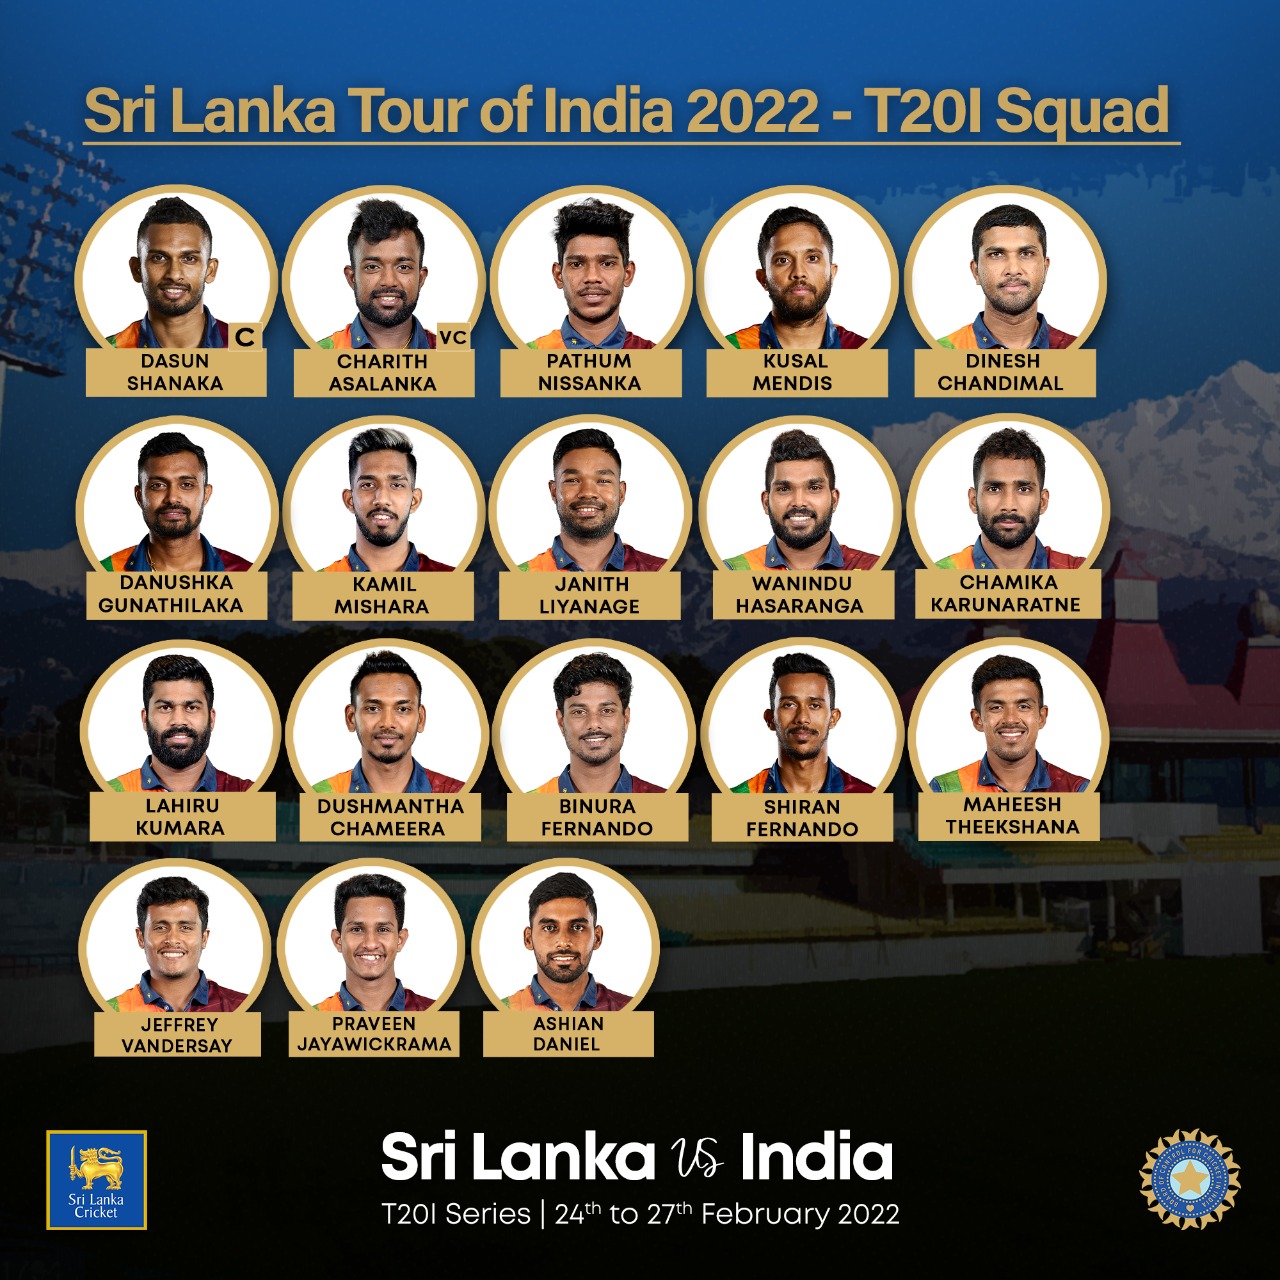 Sri Lanka T20I squad for India tour 2022